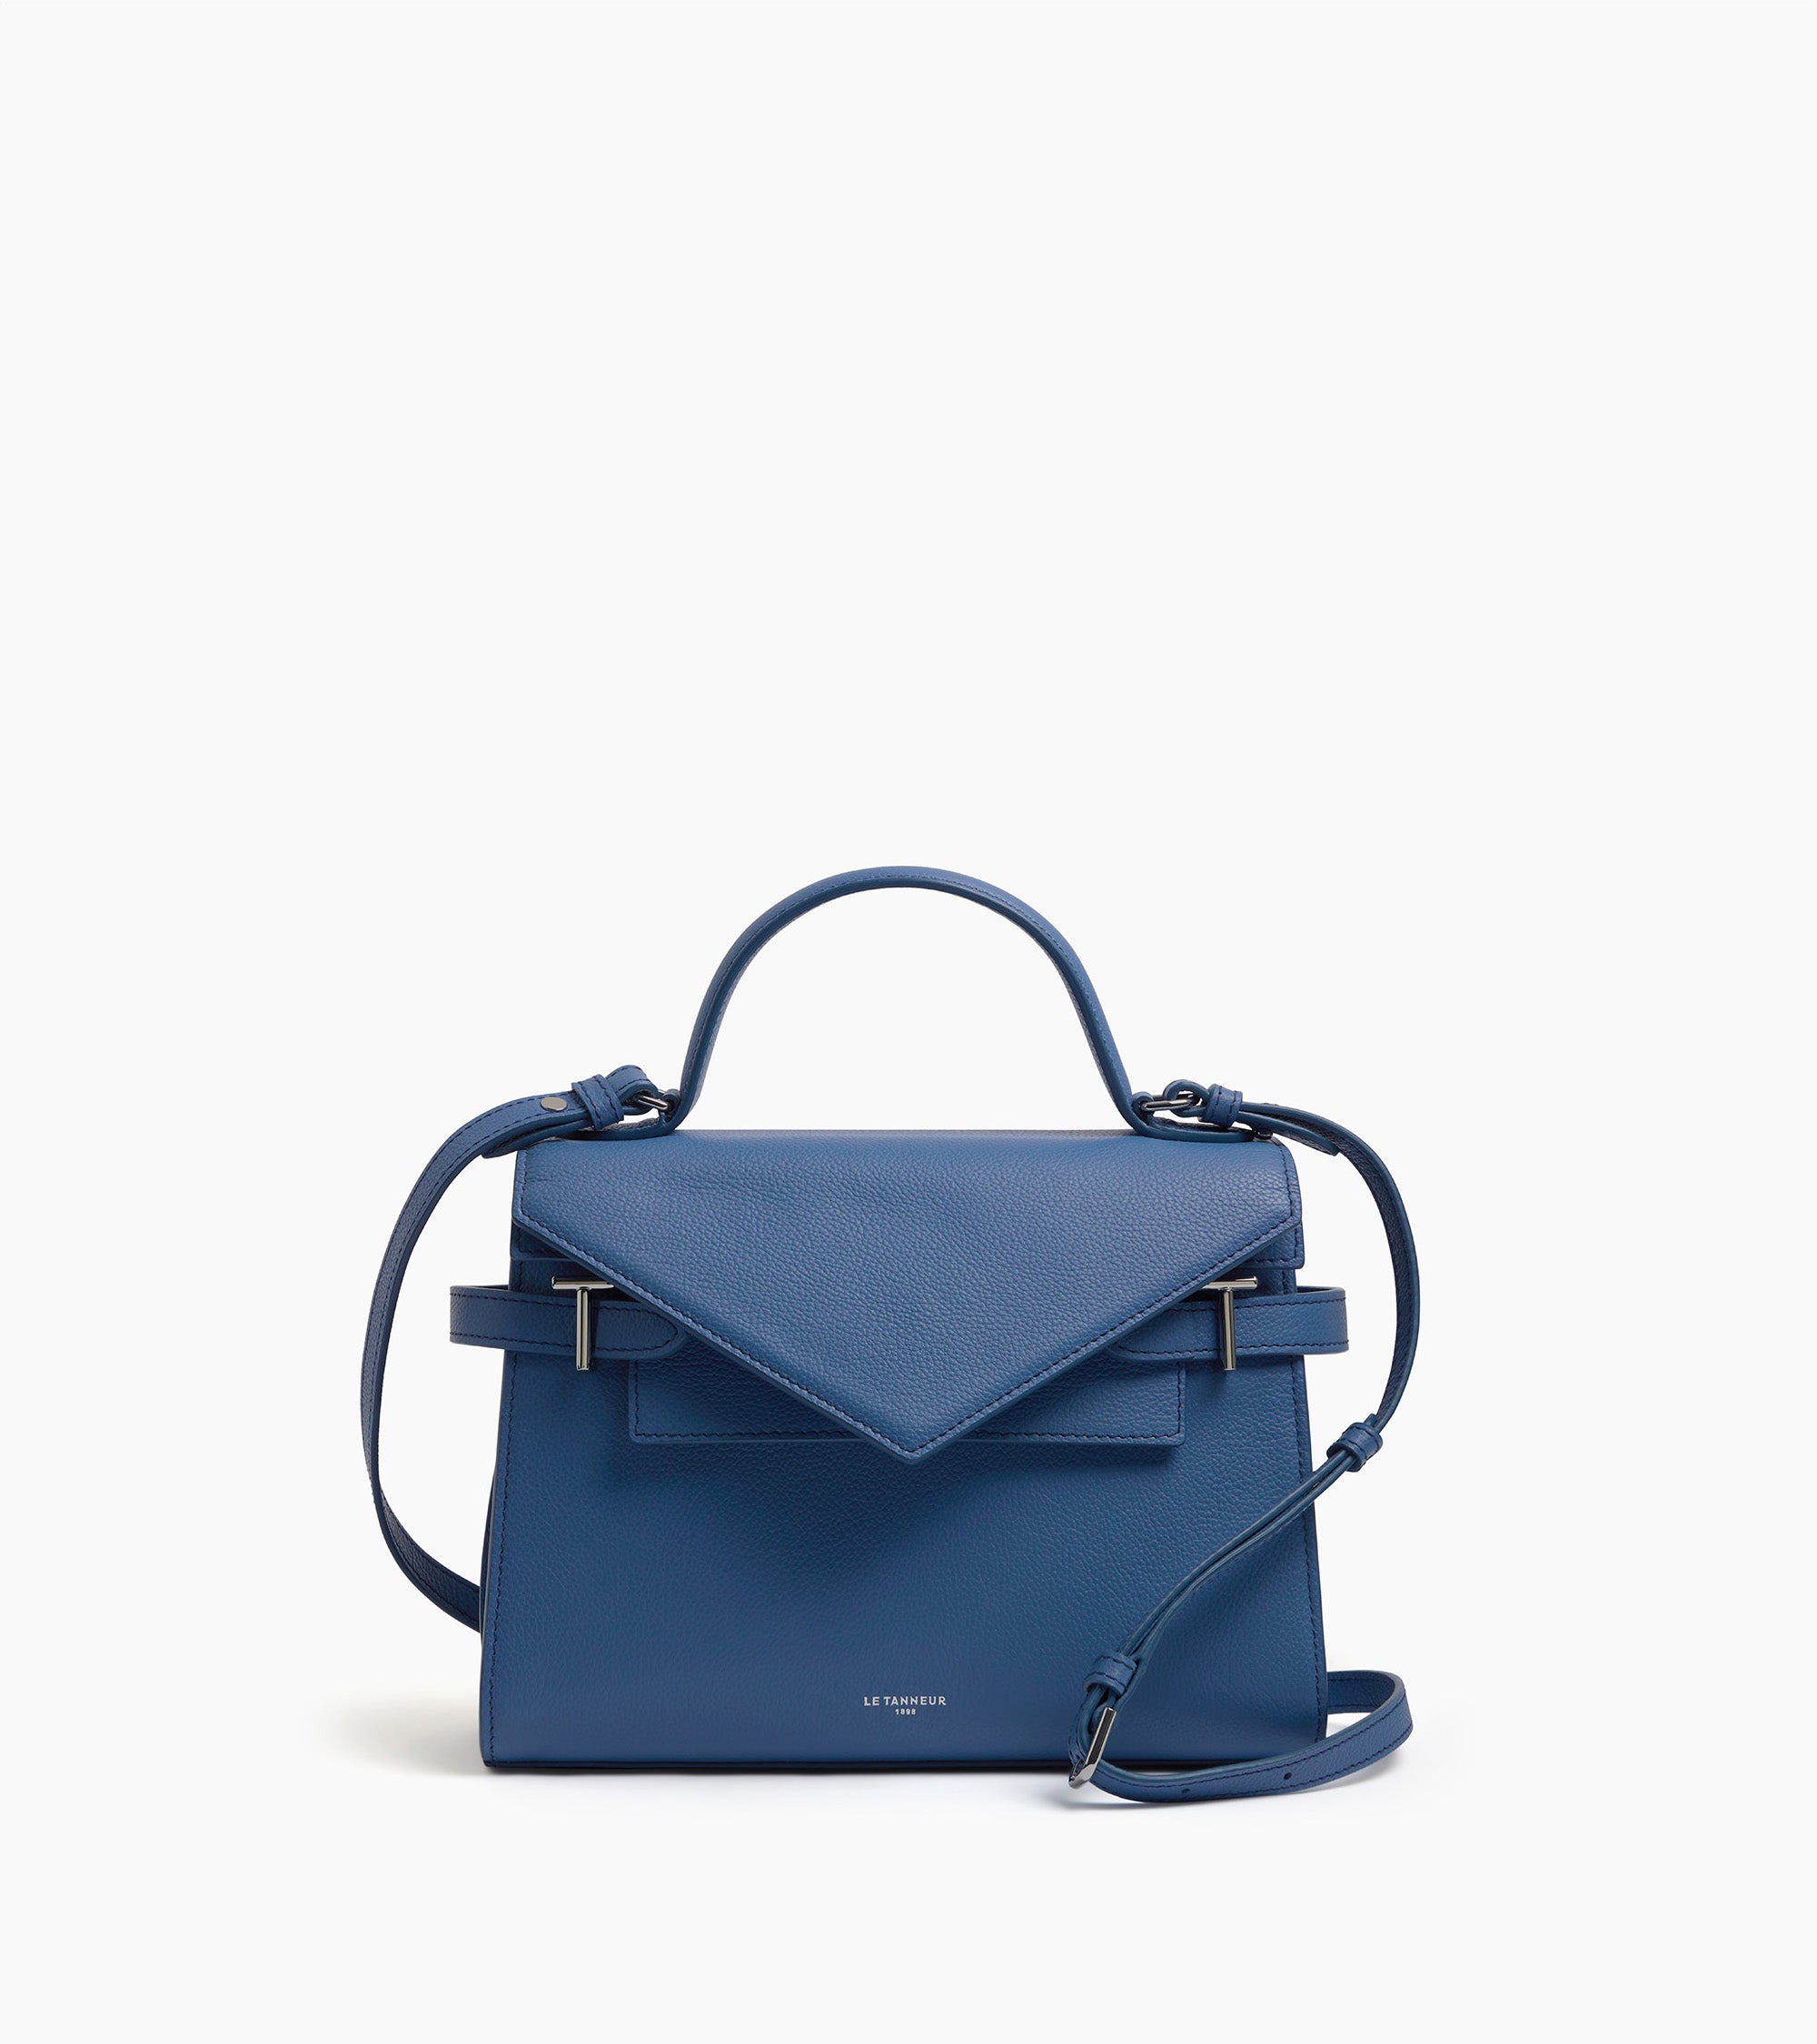 Emilie medium double flap handbag model in grained leather